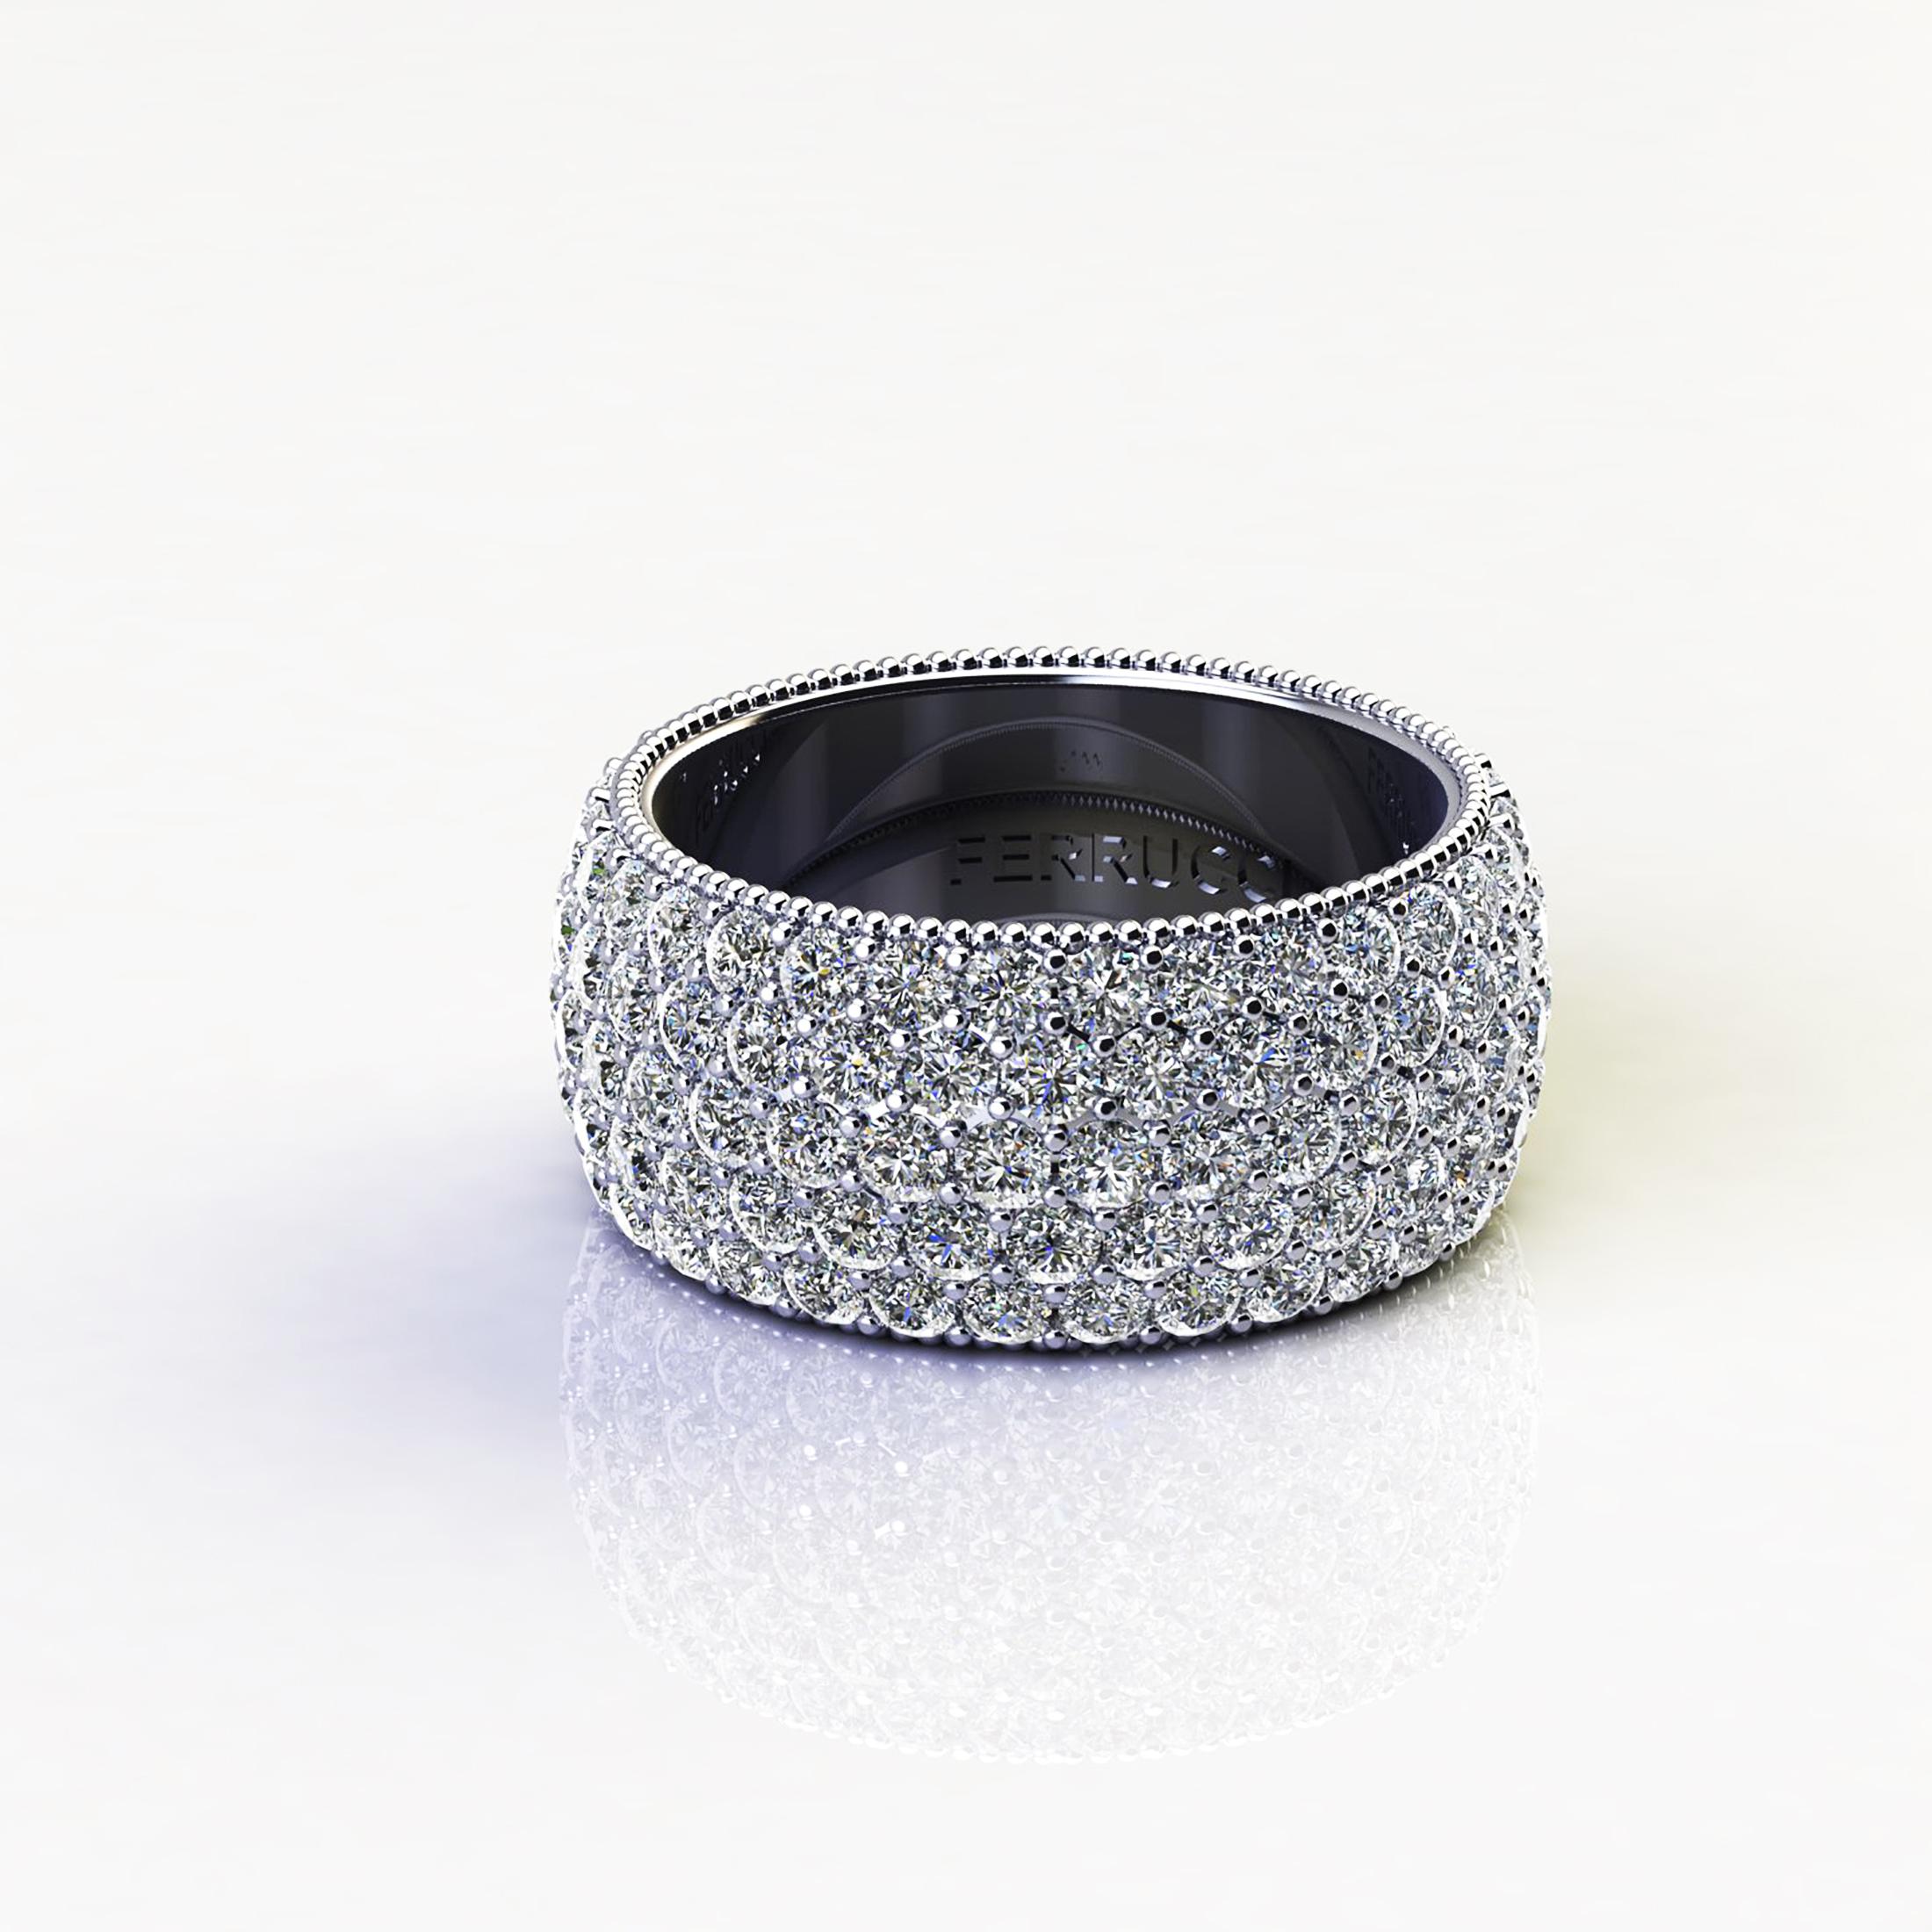 Modern Ferrucci 4.30 Carat Wide White Diamond Pave' Ring in 18 Karat White Gold